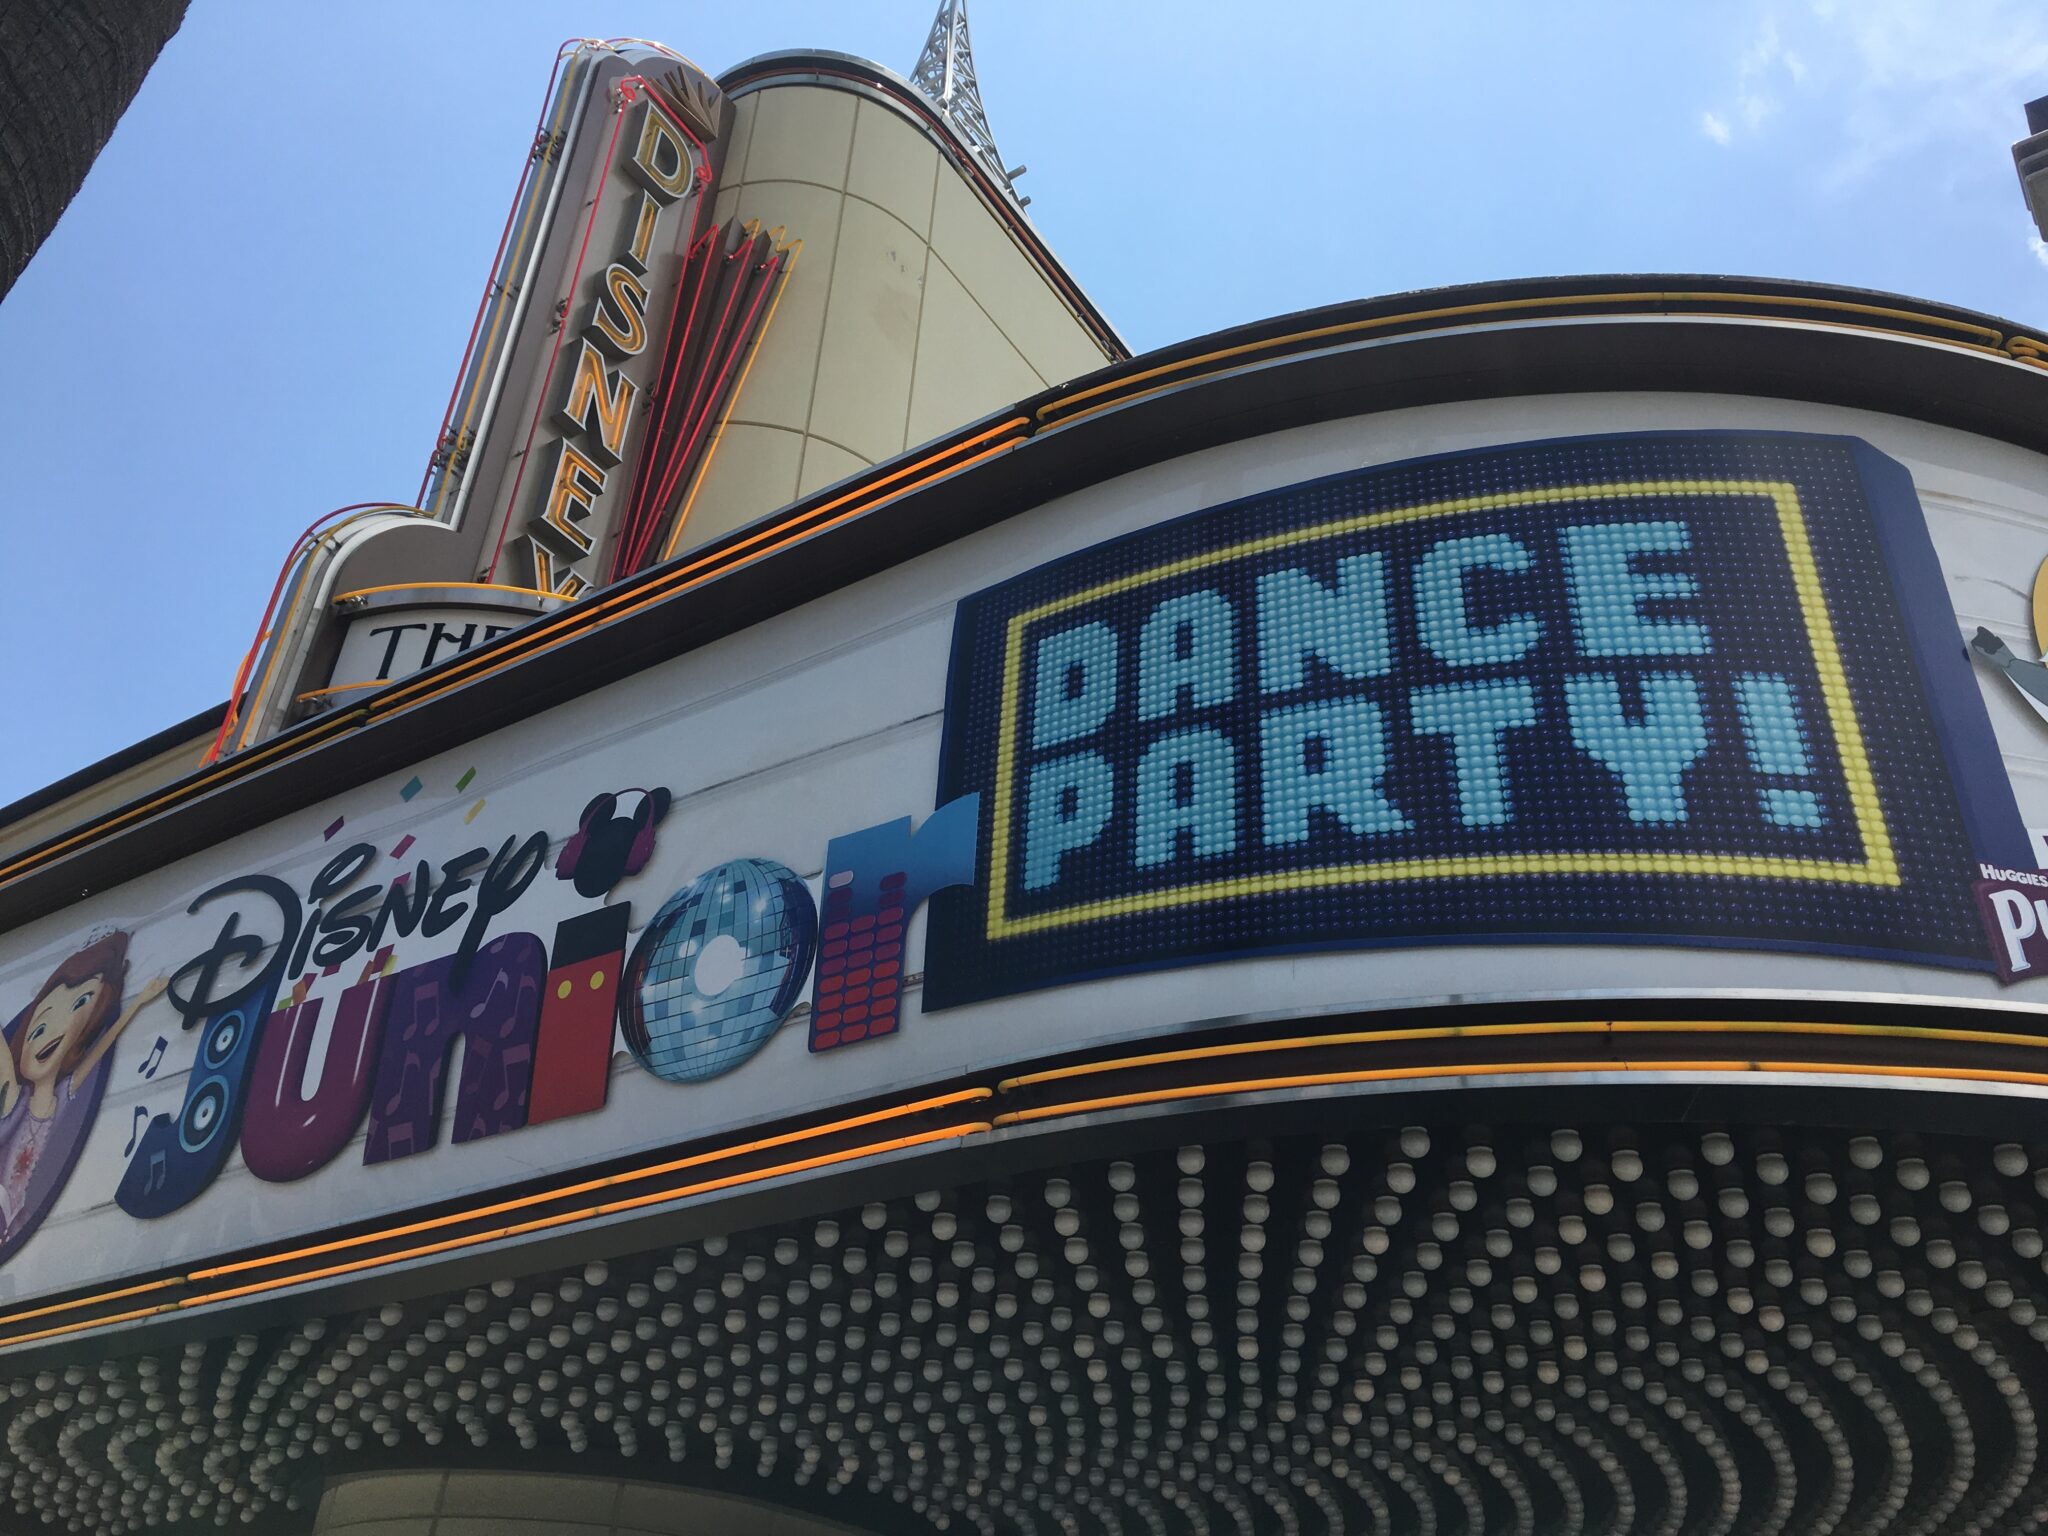 Disney Junior Dance Party' Now Open at Disney California Adventure Park